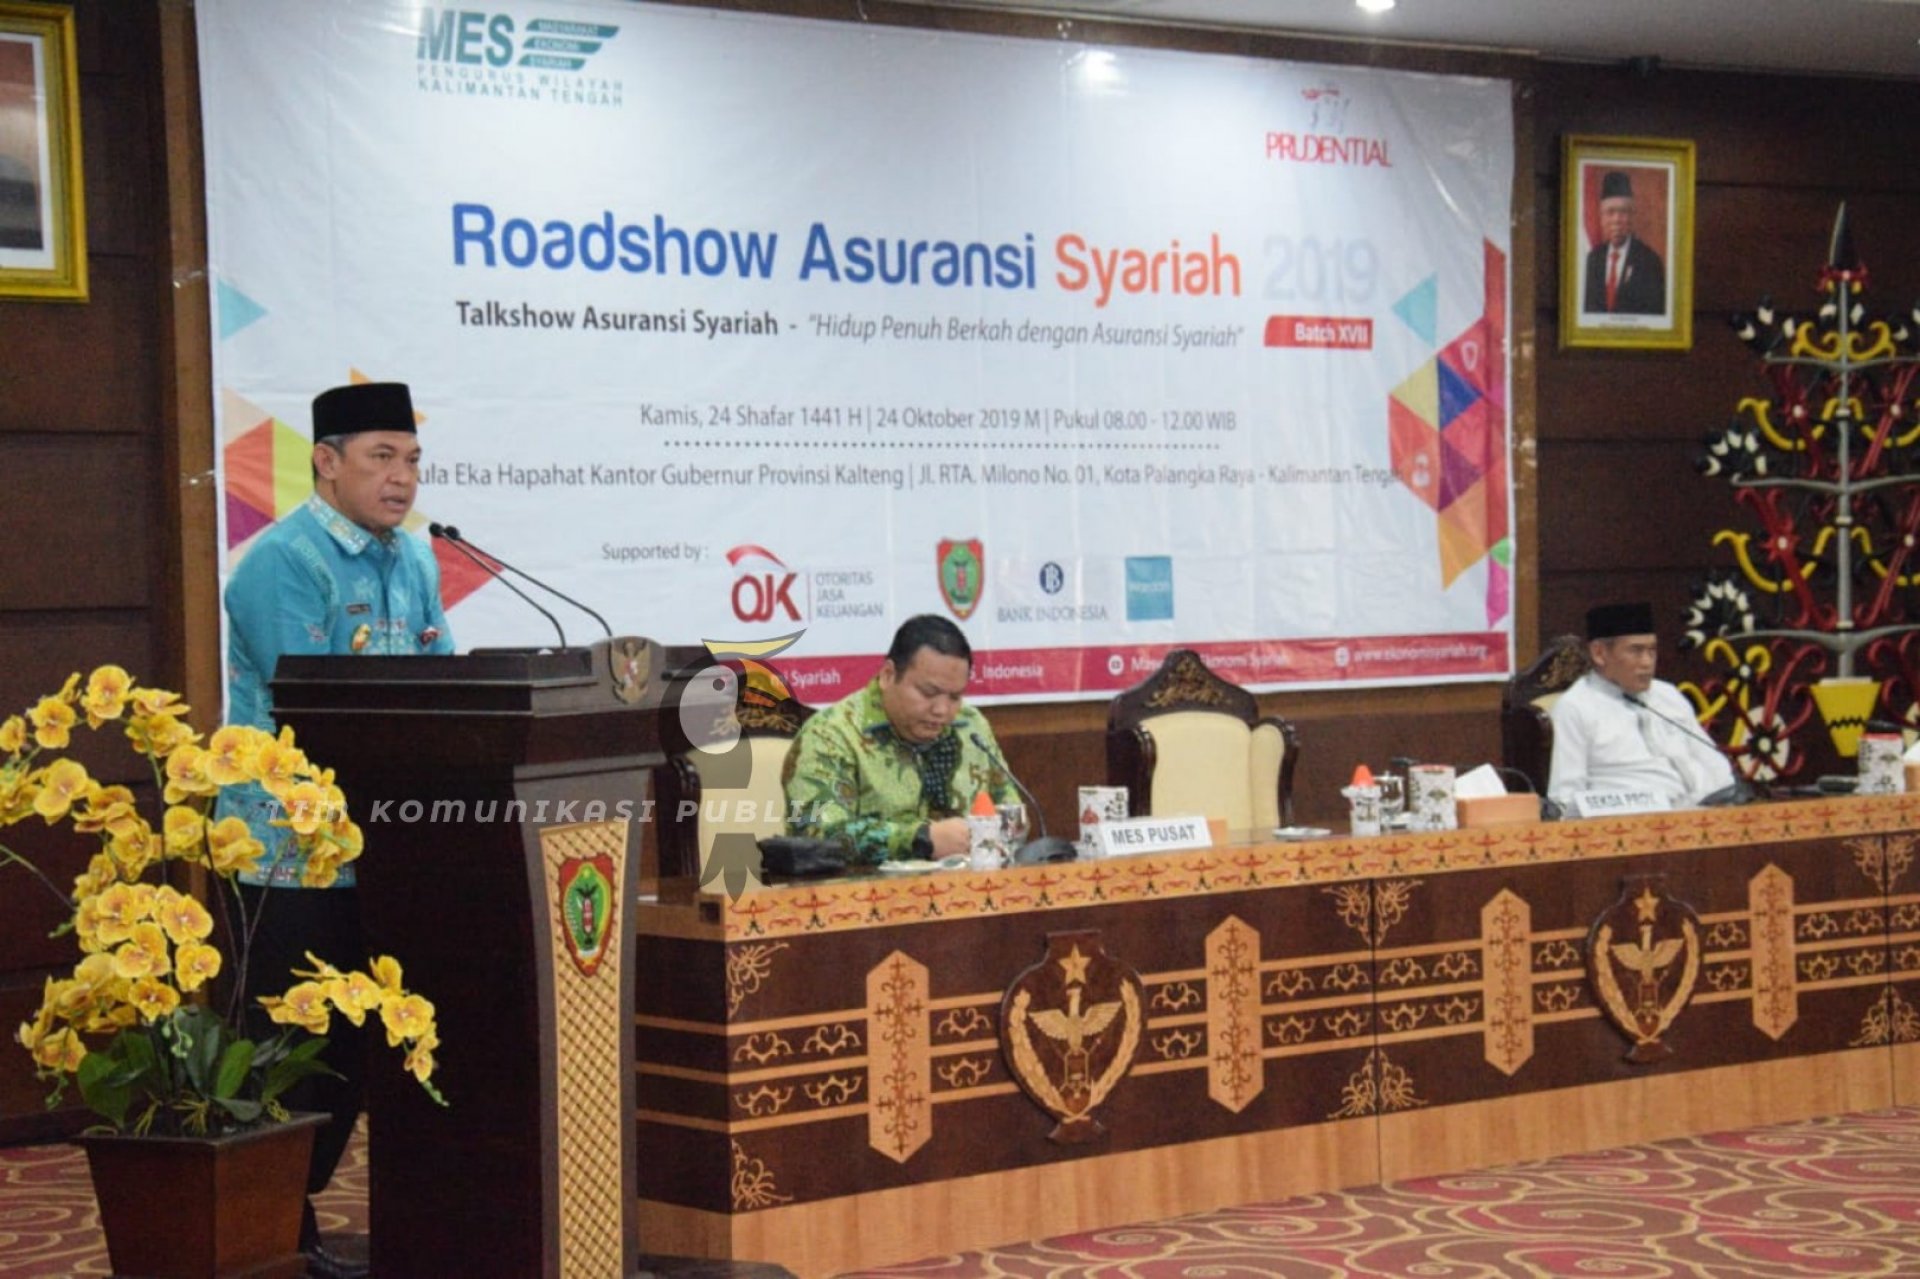 Pembukaan Roadshow Asuransi Syari'ah Pengurus Wilayah MES Kalimantan Tengah